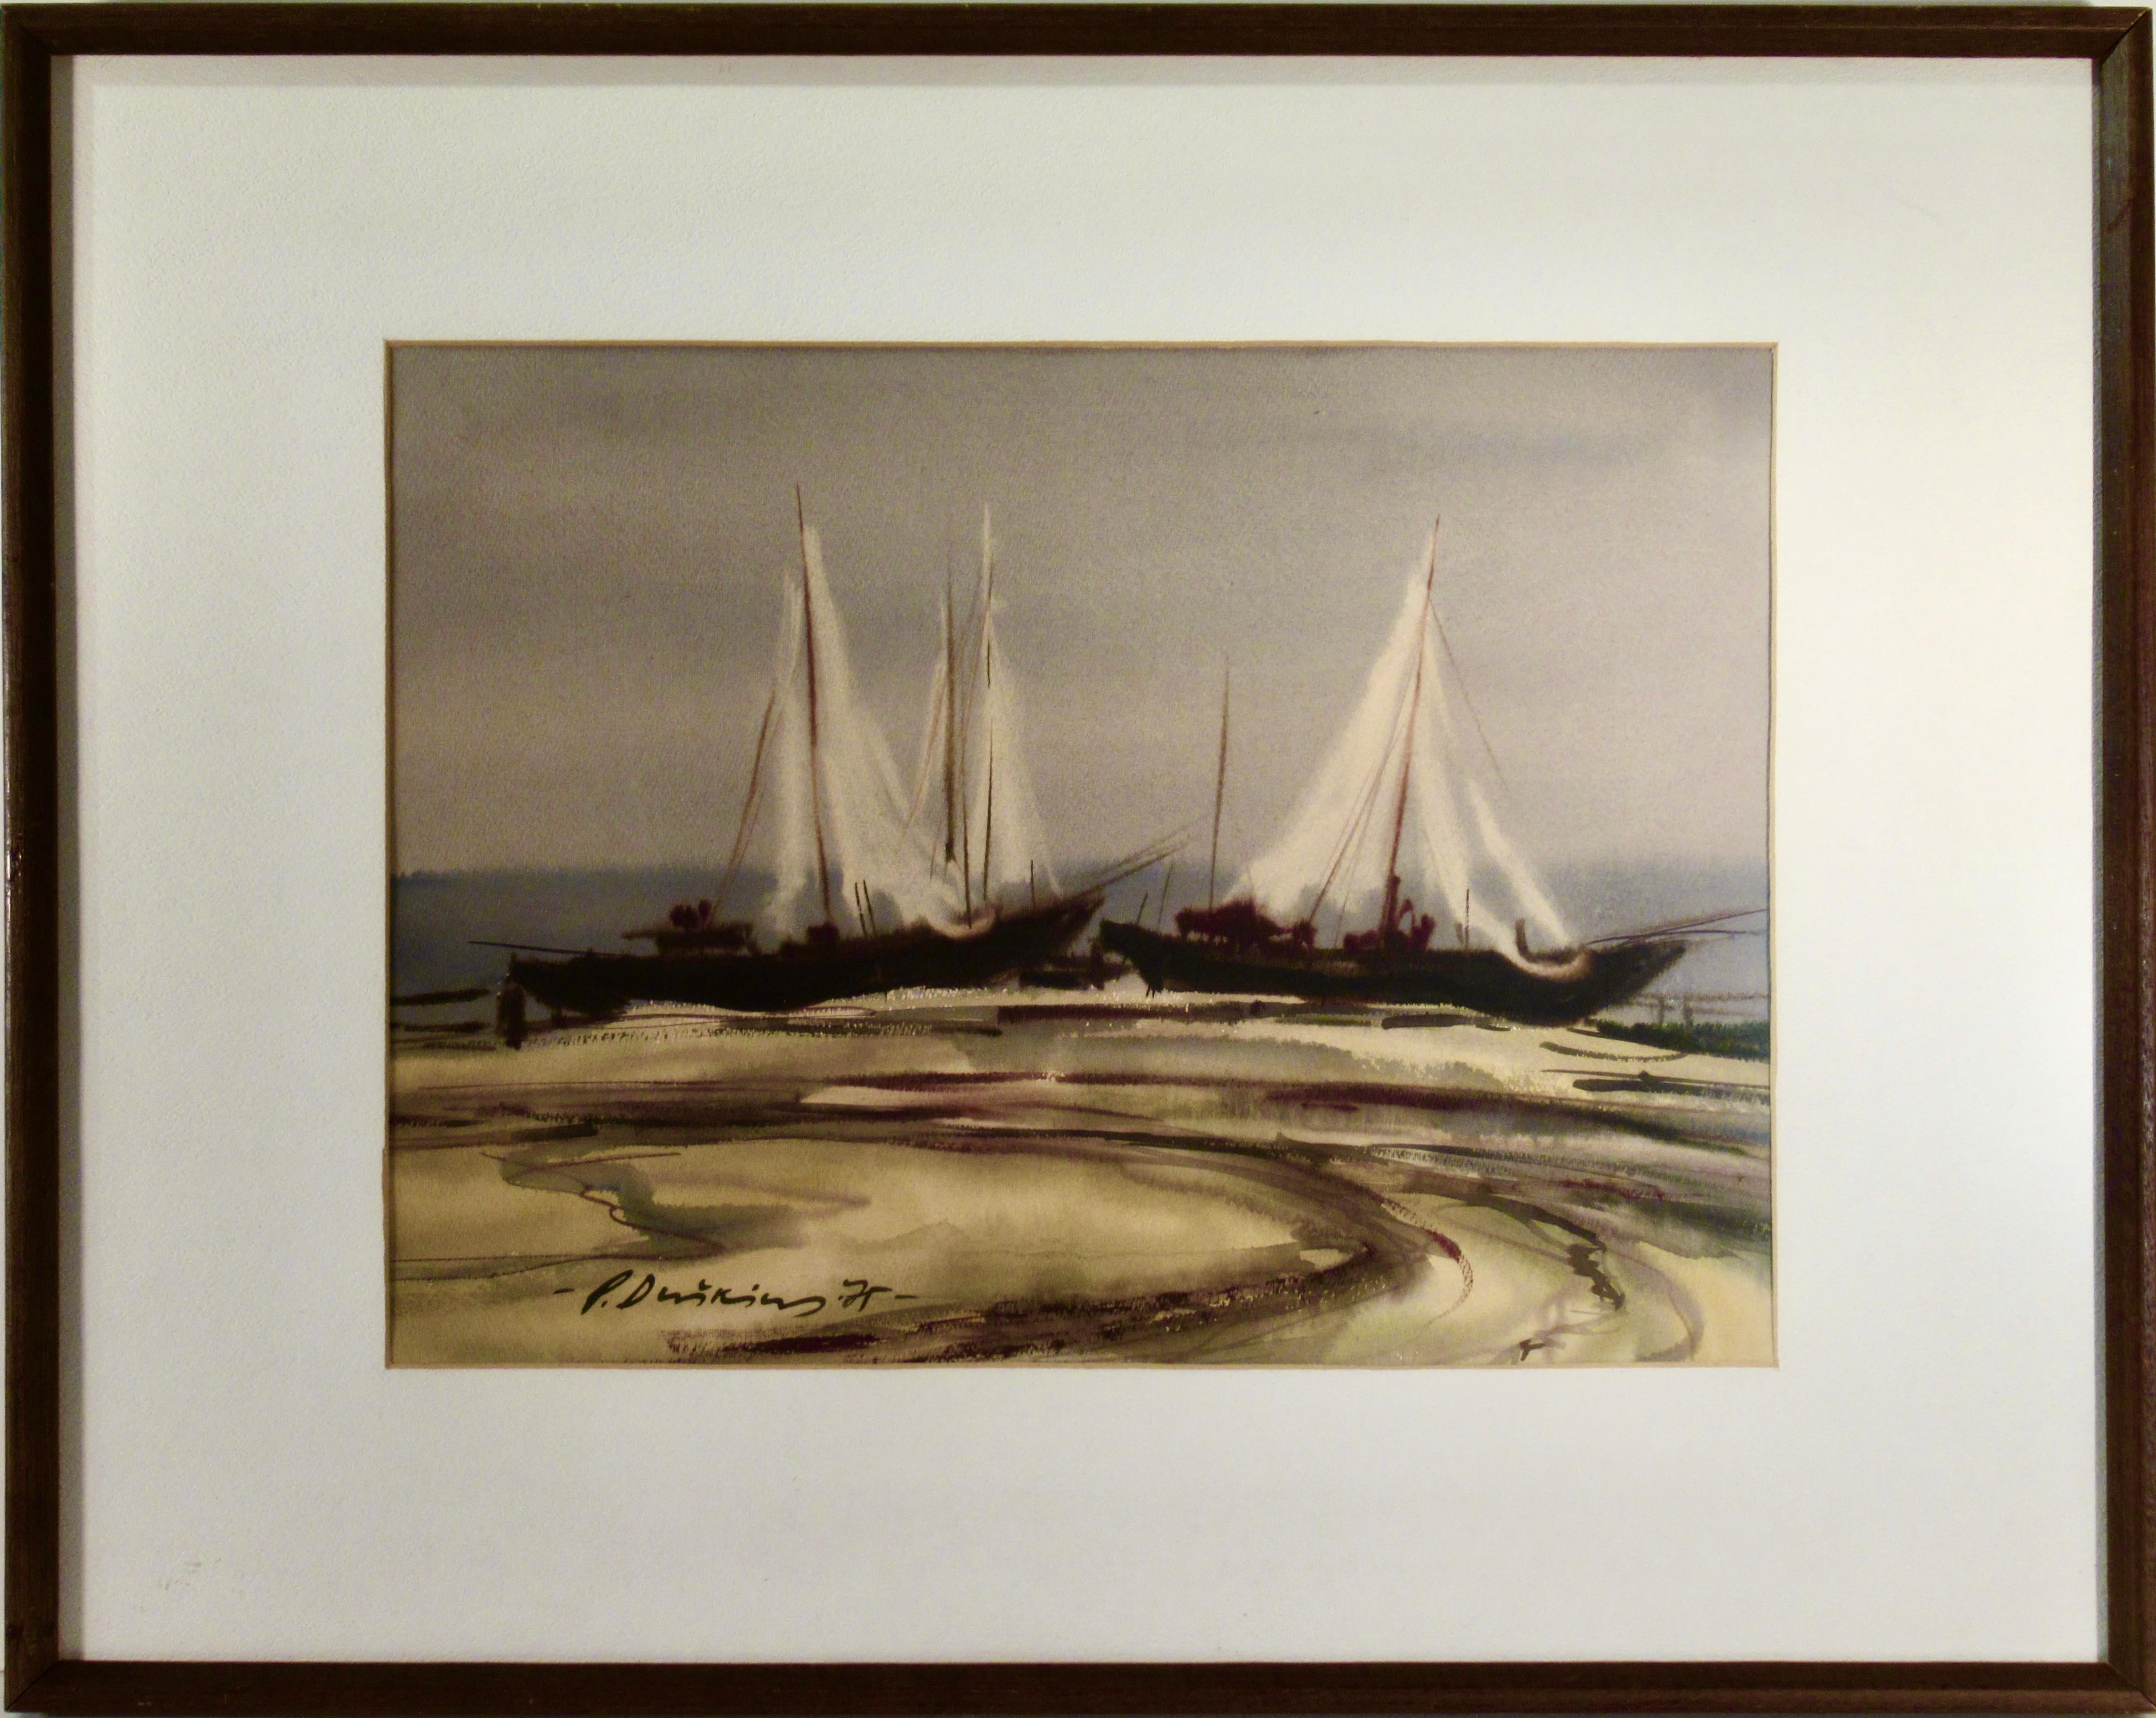 Paul Duskins Landscape Art - Seashore with Boats